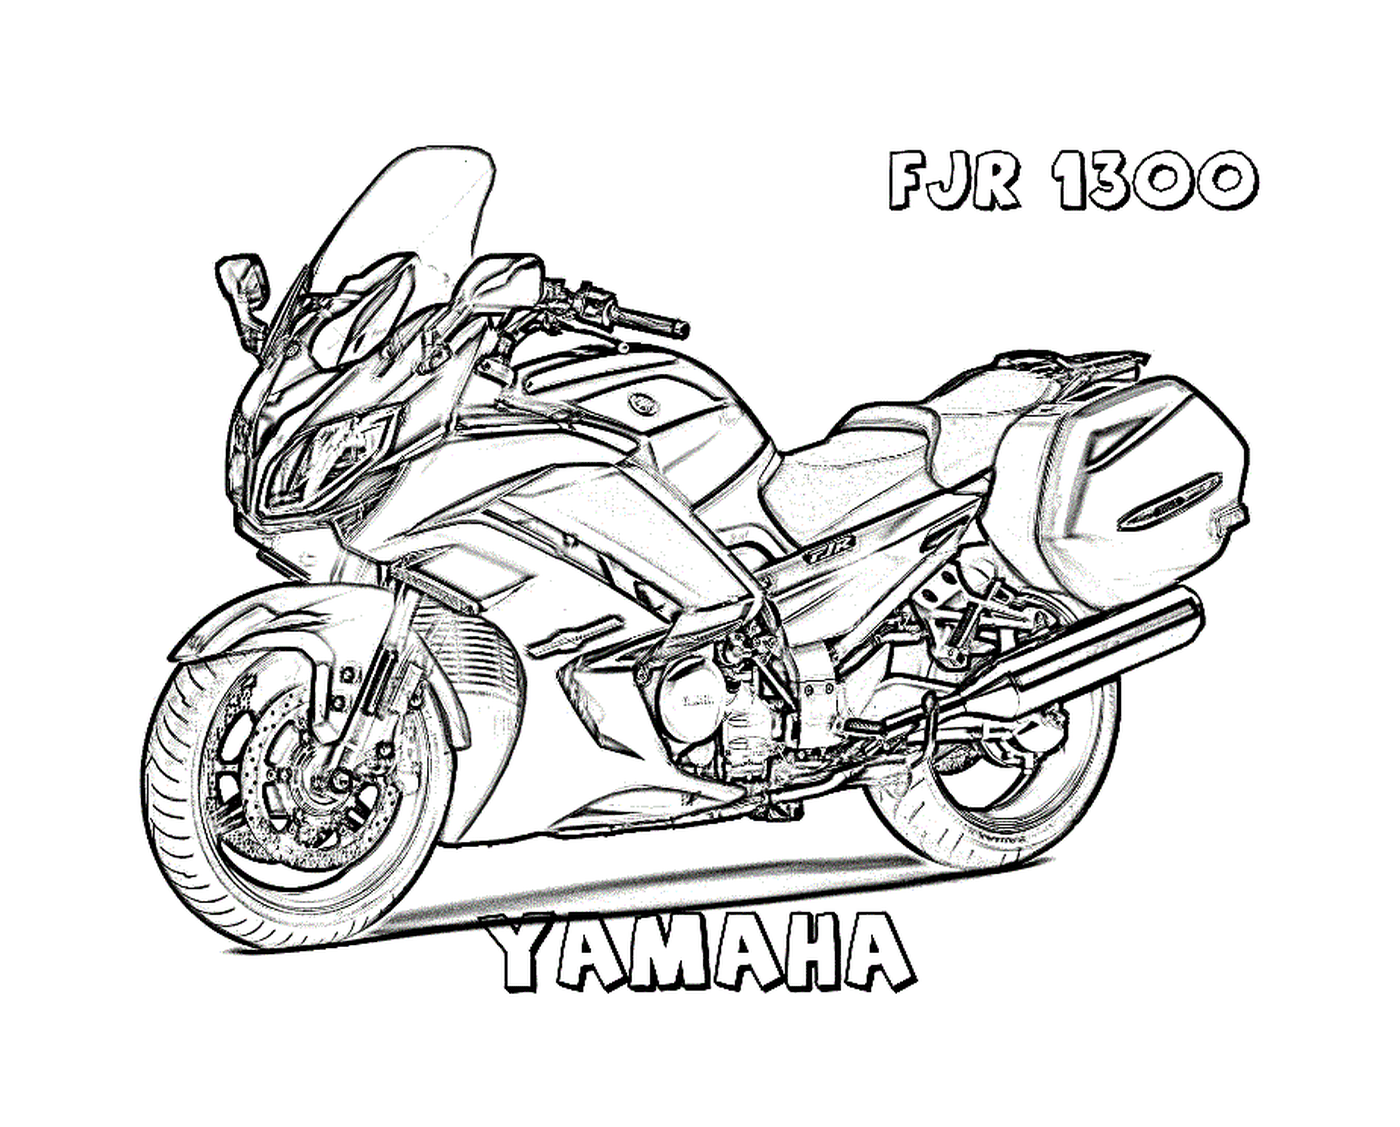  Carreras Yamaha Moto 